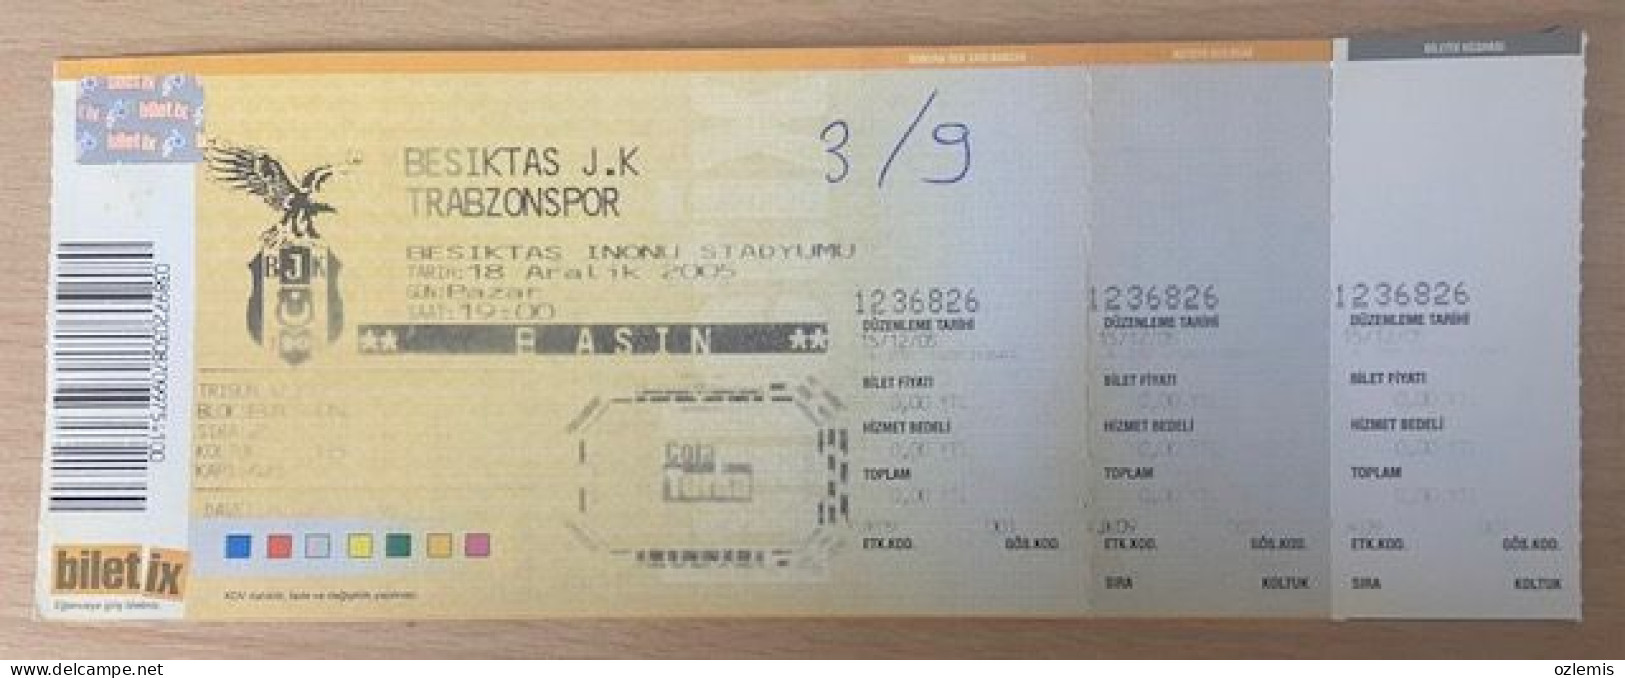 BESIKTAS - TRABZONSPOR ,MATCH TICKET ,2005 - Match Tickets